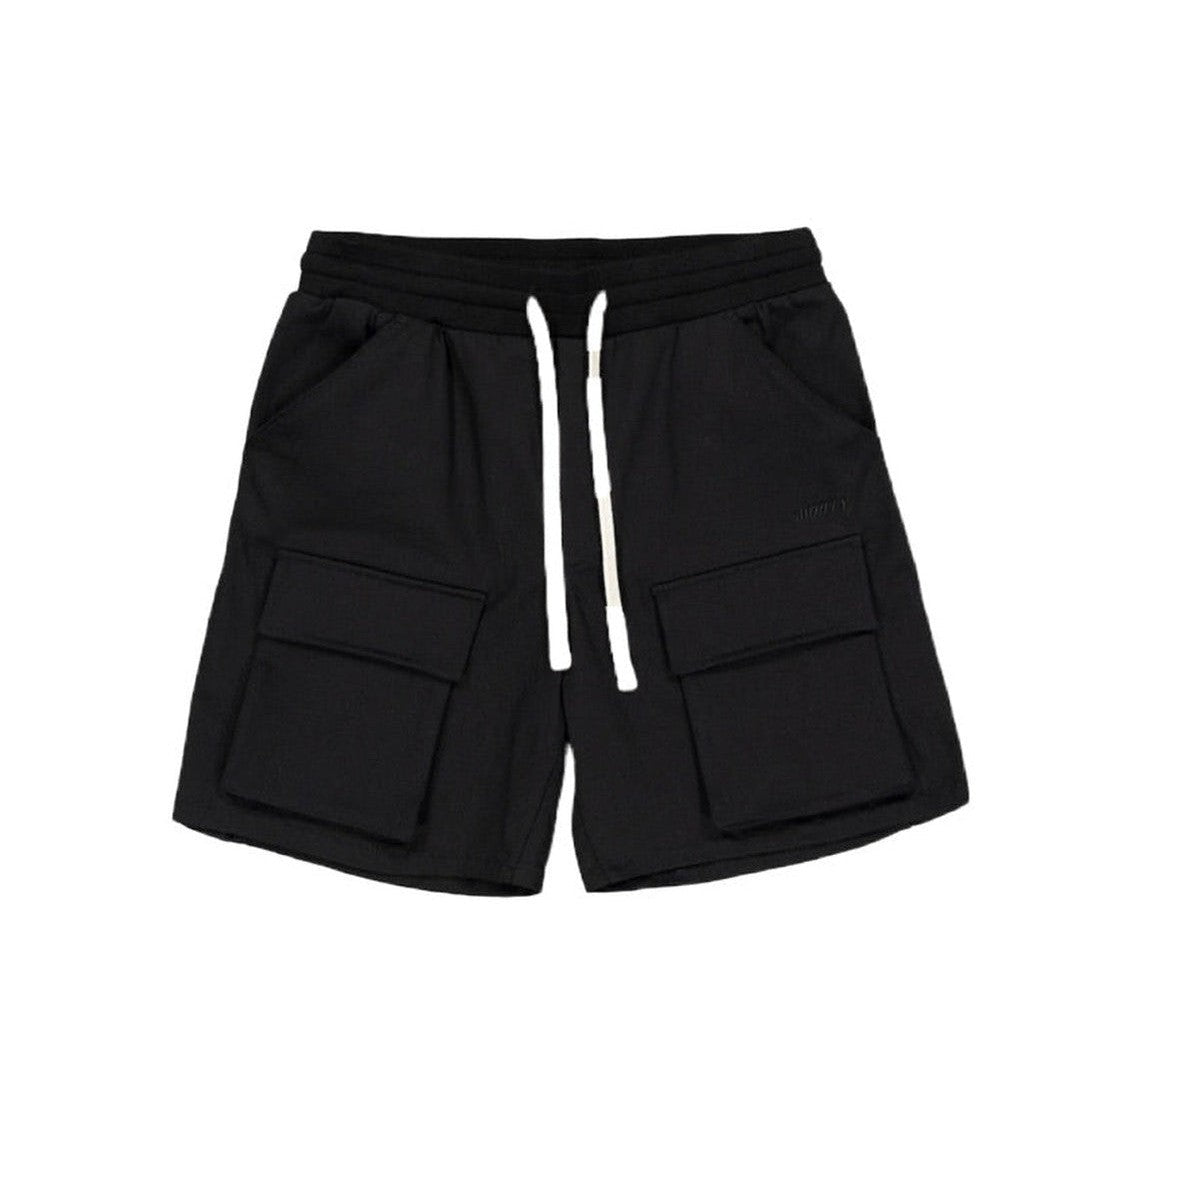 Mouty Black Cargo Shorts Pants